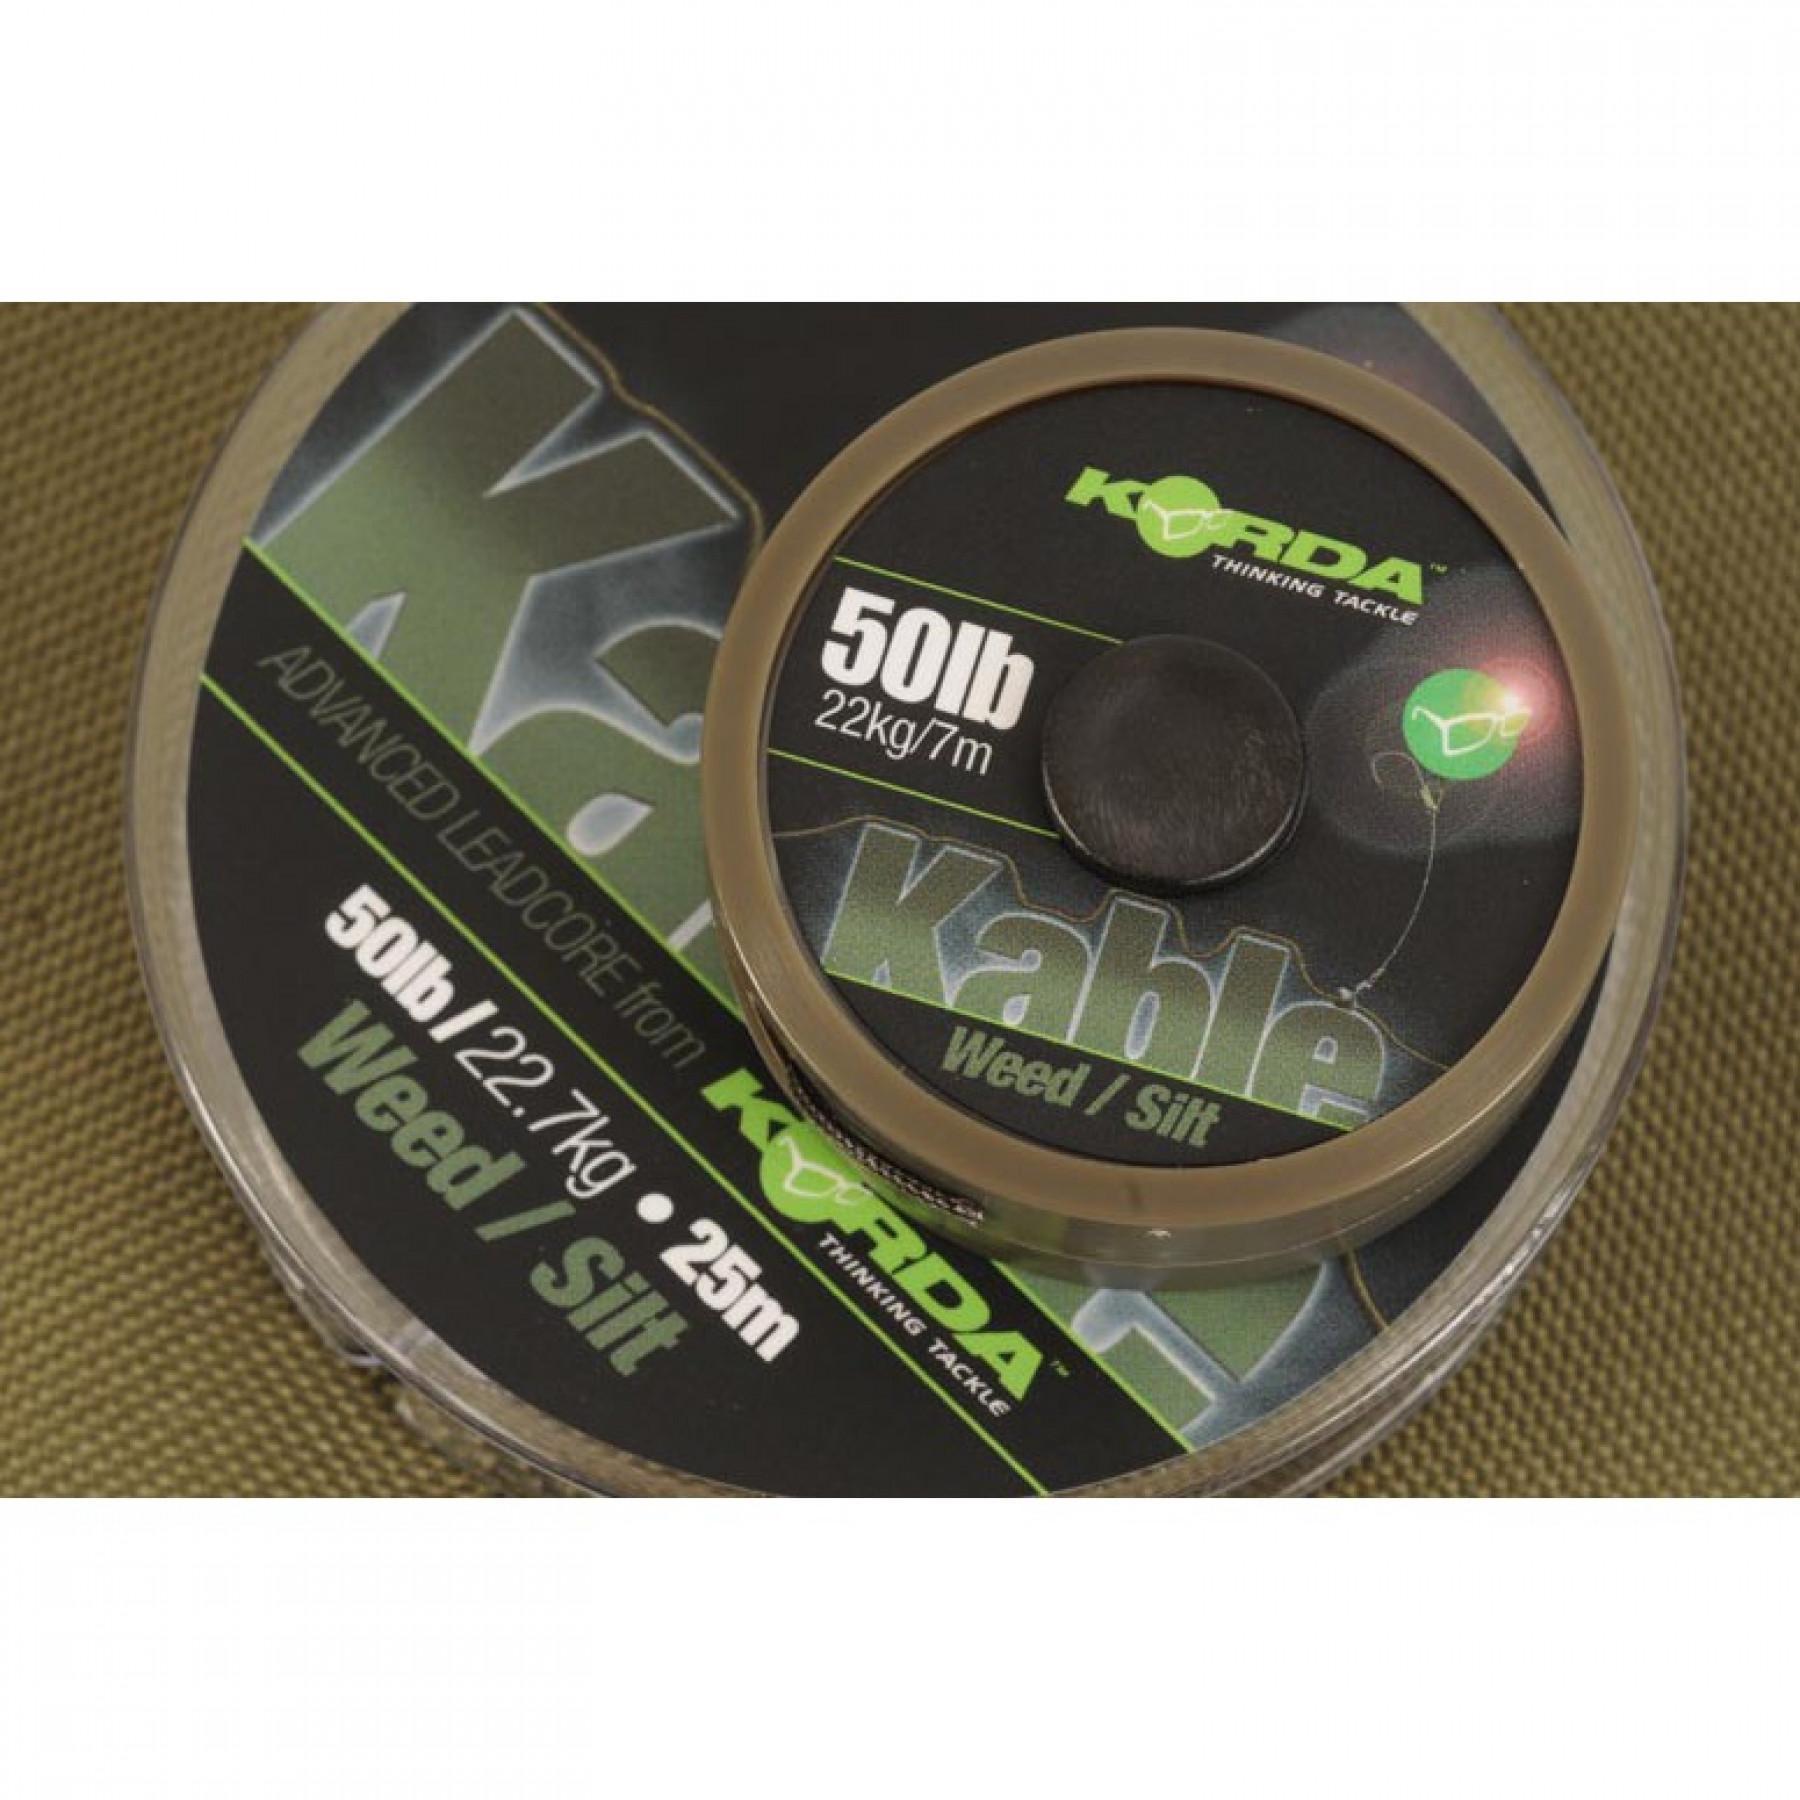 Kable Leadcore Korda Weed/Silt, 25m